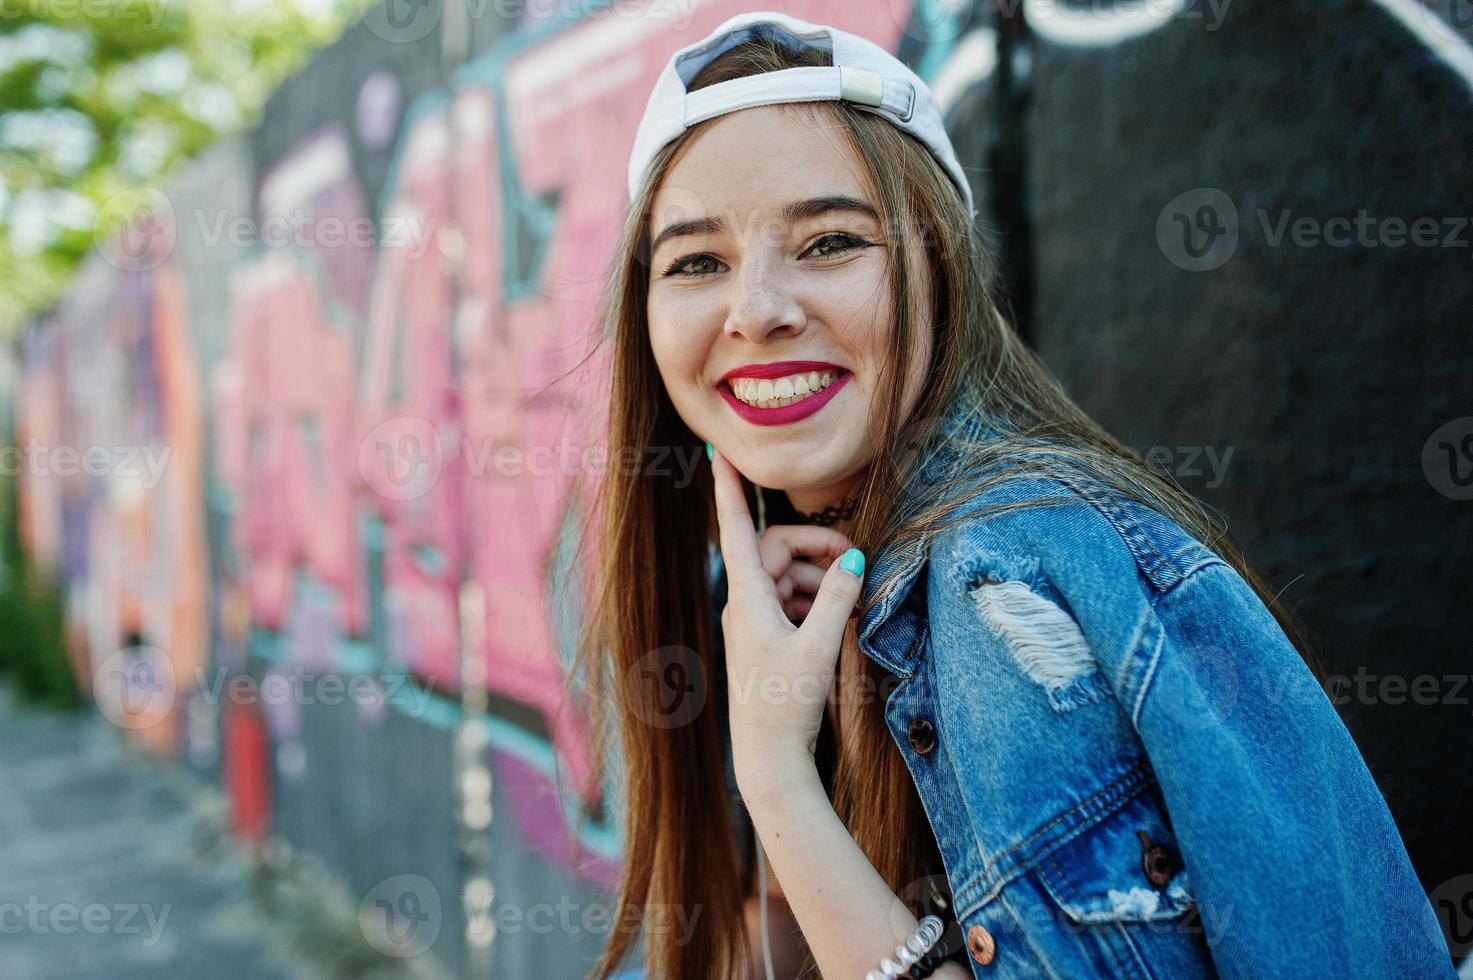 elegante chica hipster casual con gorra y jeans usa música para escuchar desde auriculares de teléfono móvil contra una gran pared de graffiti con bomba. foto